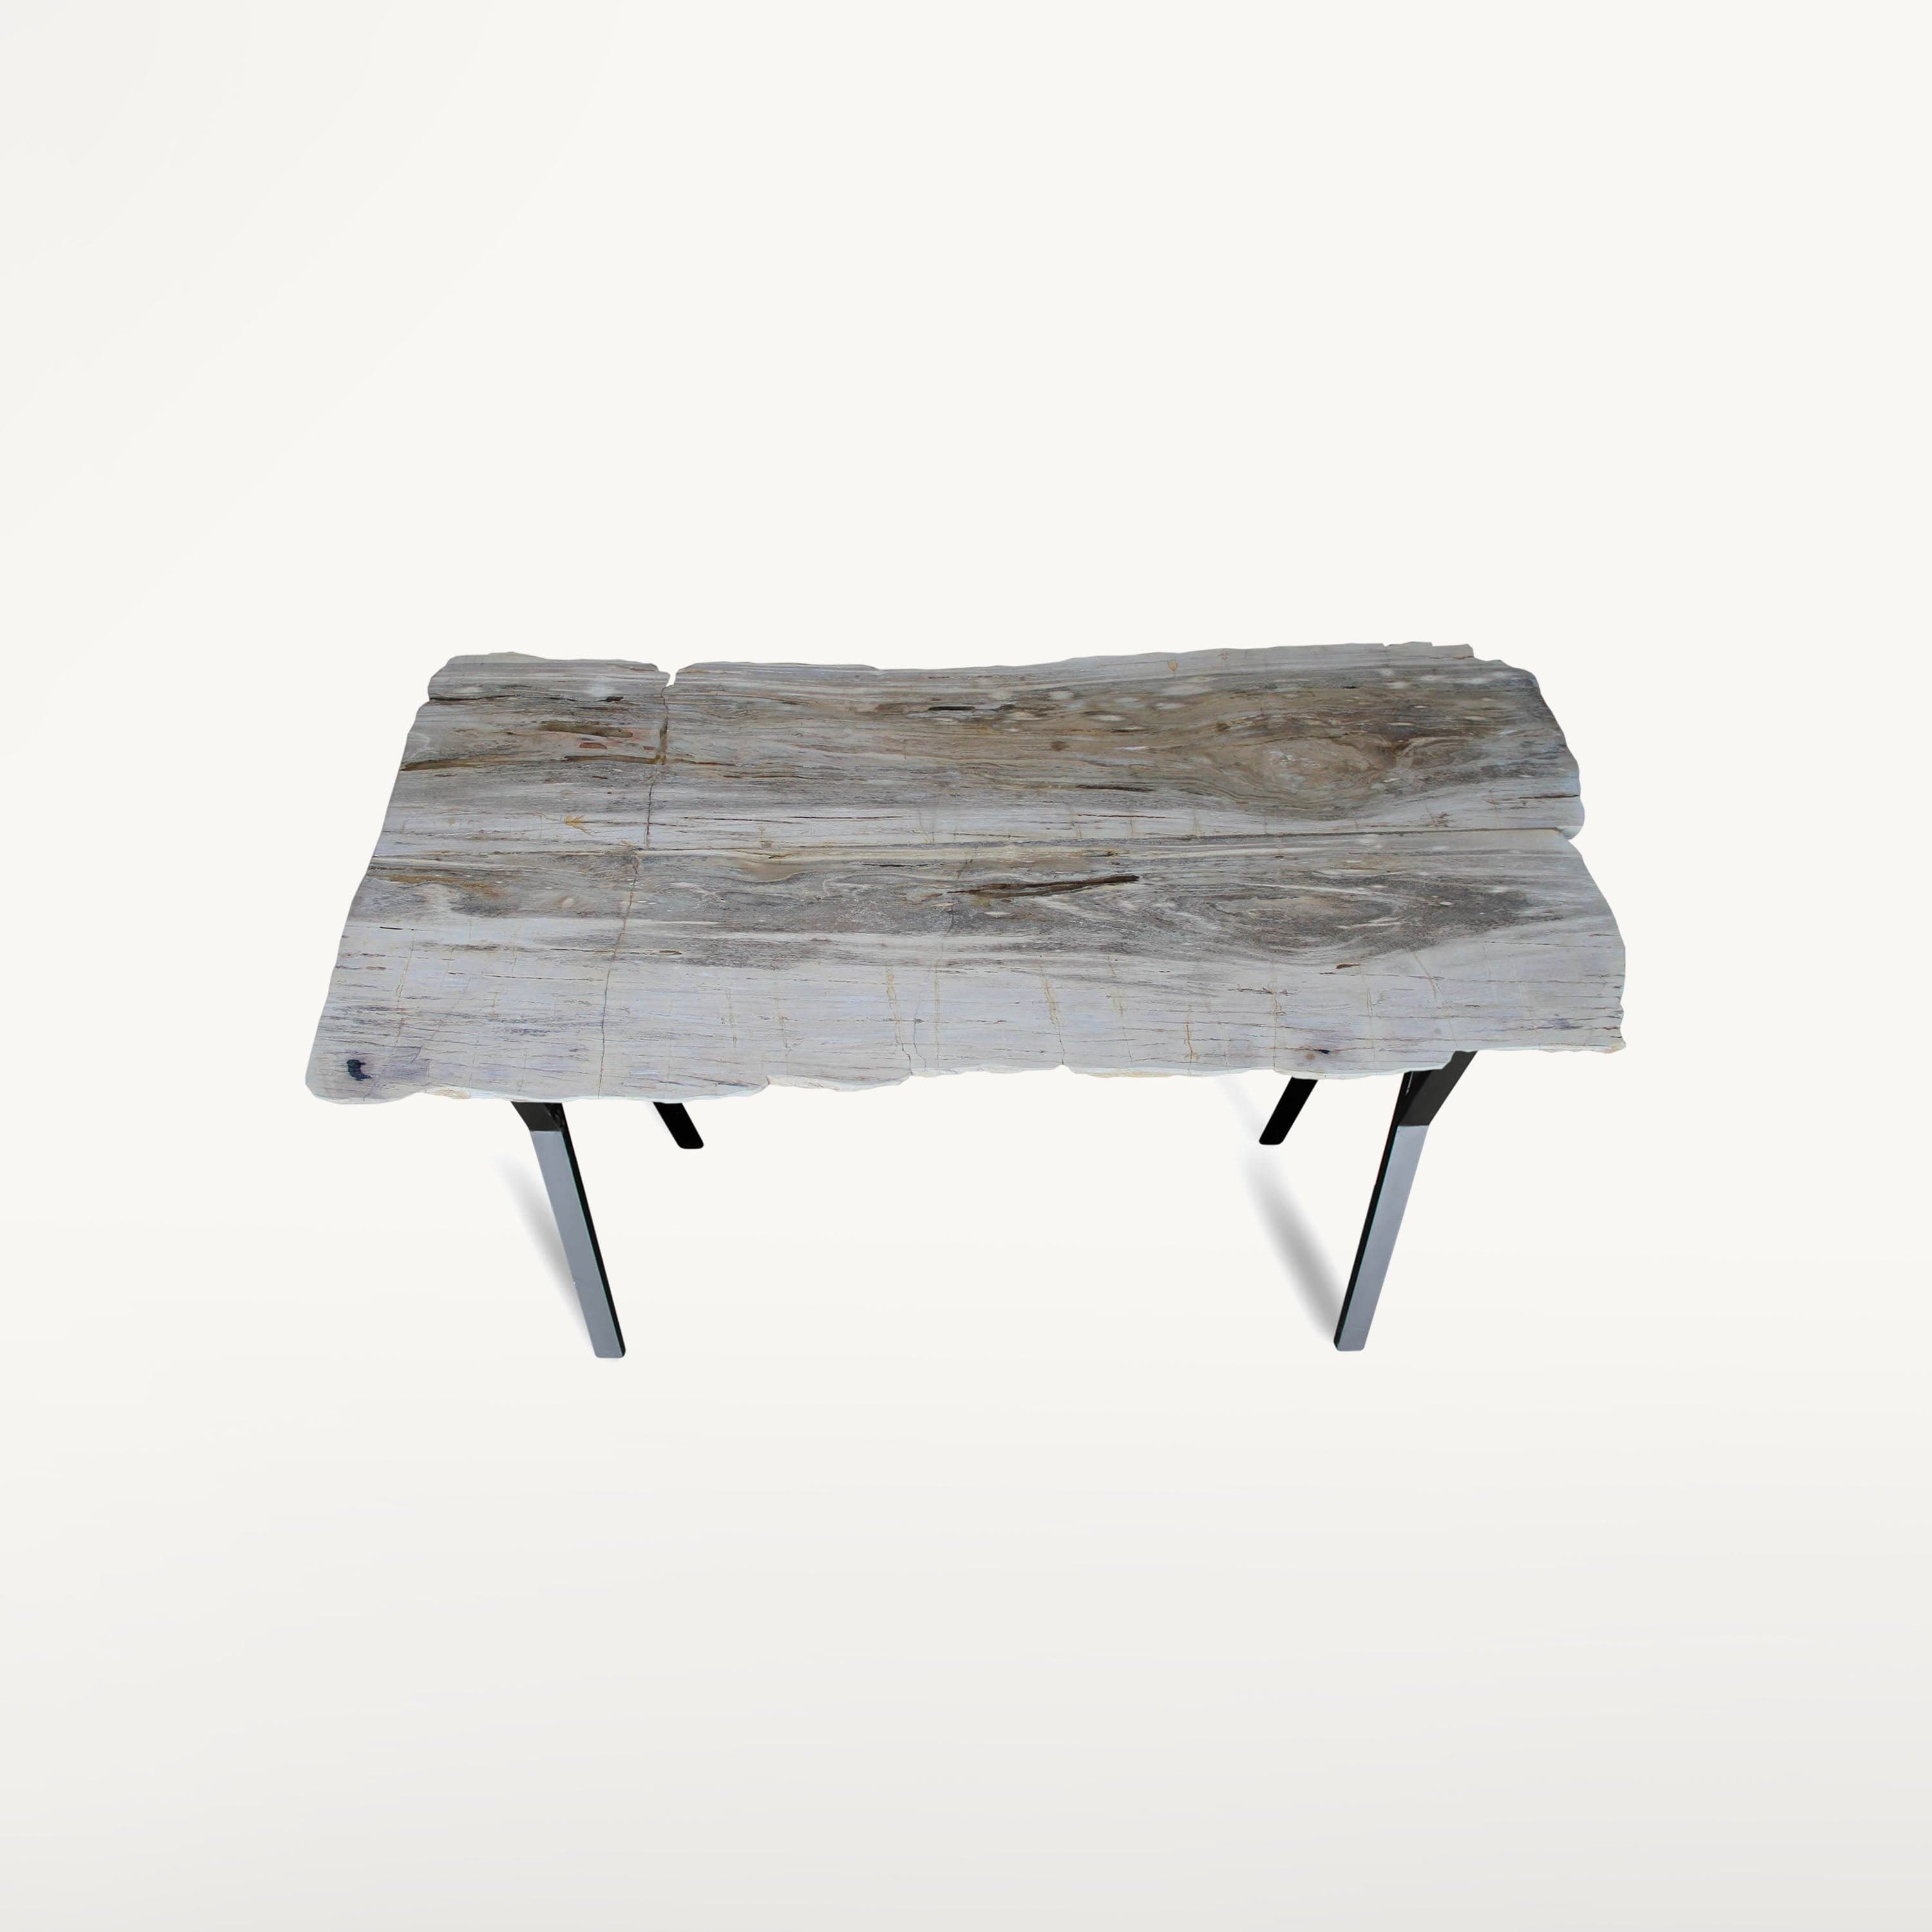 Kalifano Petrified Wood Polished Petrified Wood Table from Indonesia - 88" / 606 lbs PWR22000.001